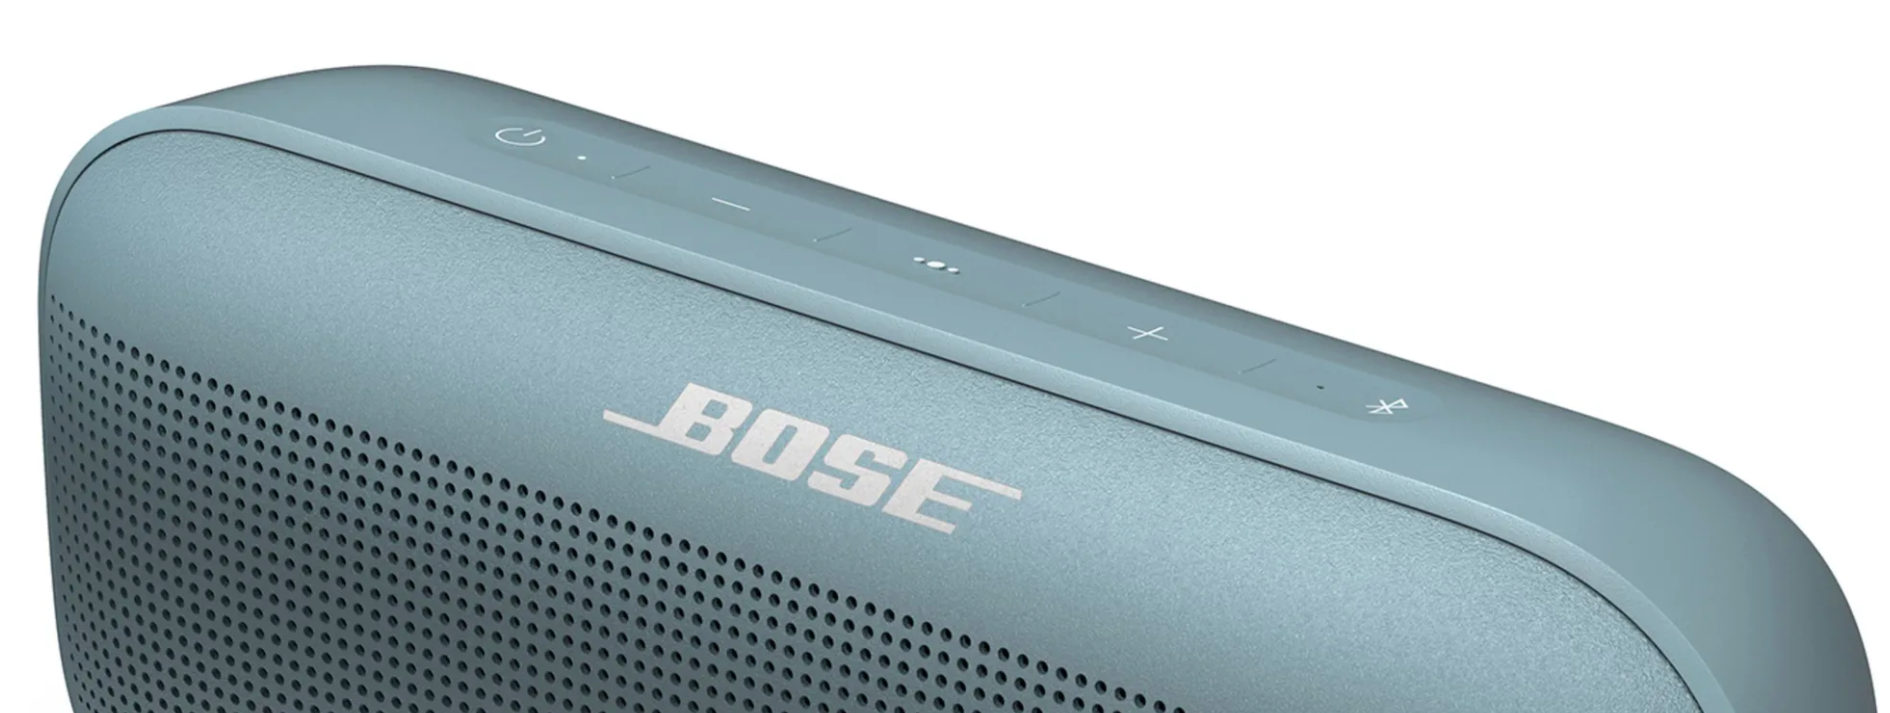 Bose flex. Bose SOUNDLINK Flex. Bose SOUNDLINK Flex динамики. Bose SOUNDLINK Air. Bose SOUNDLINK Flex разбор.